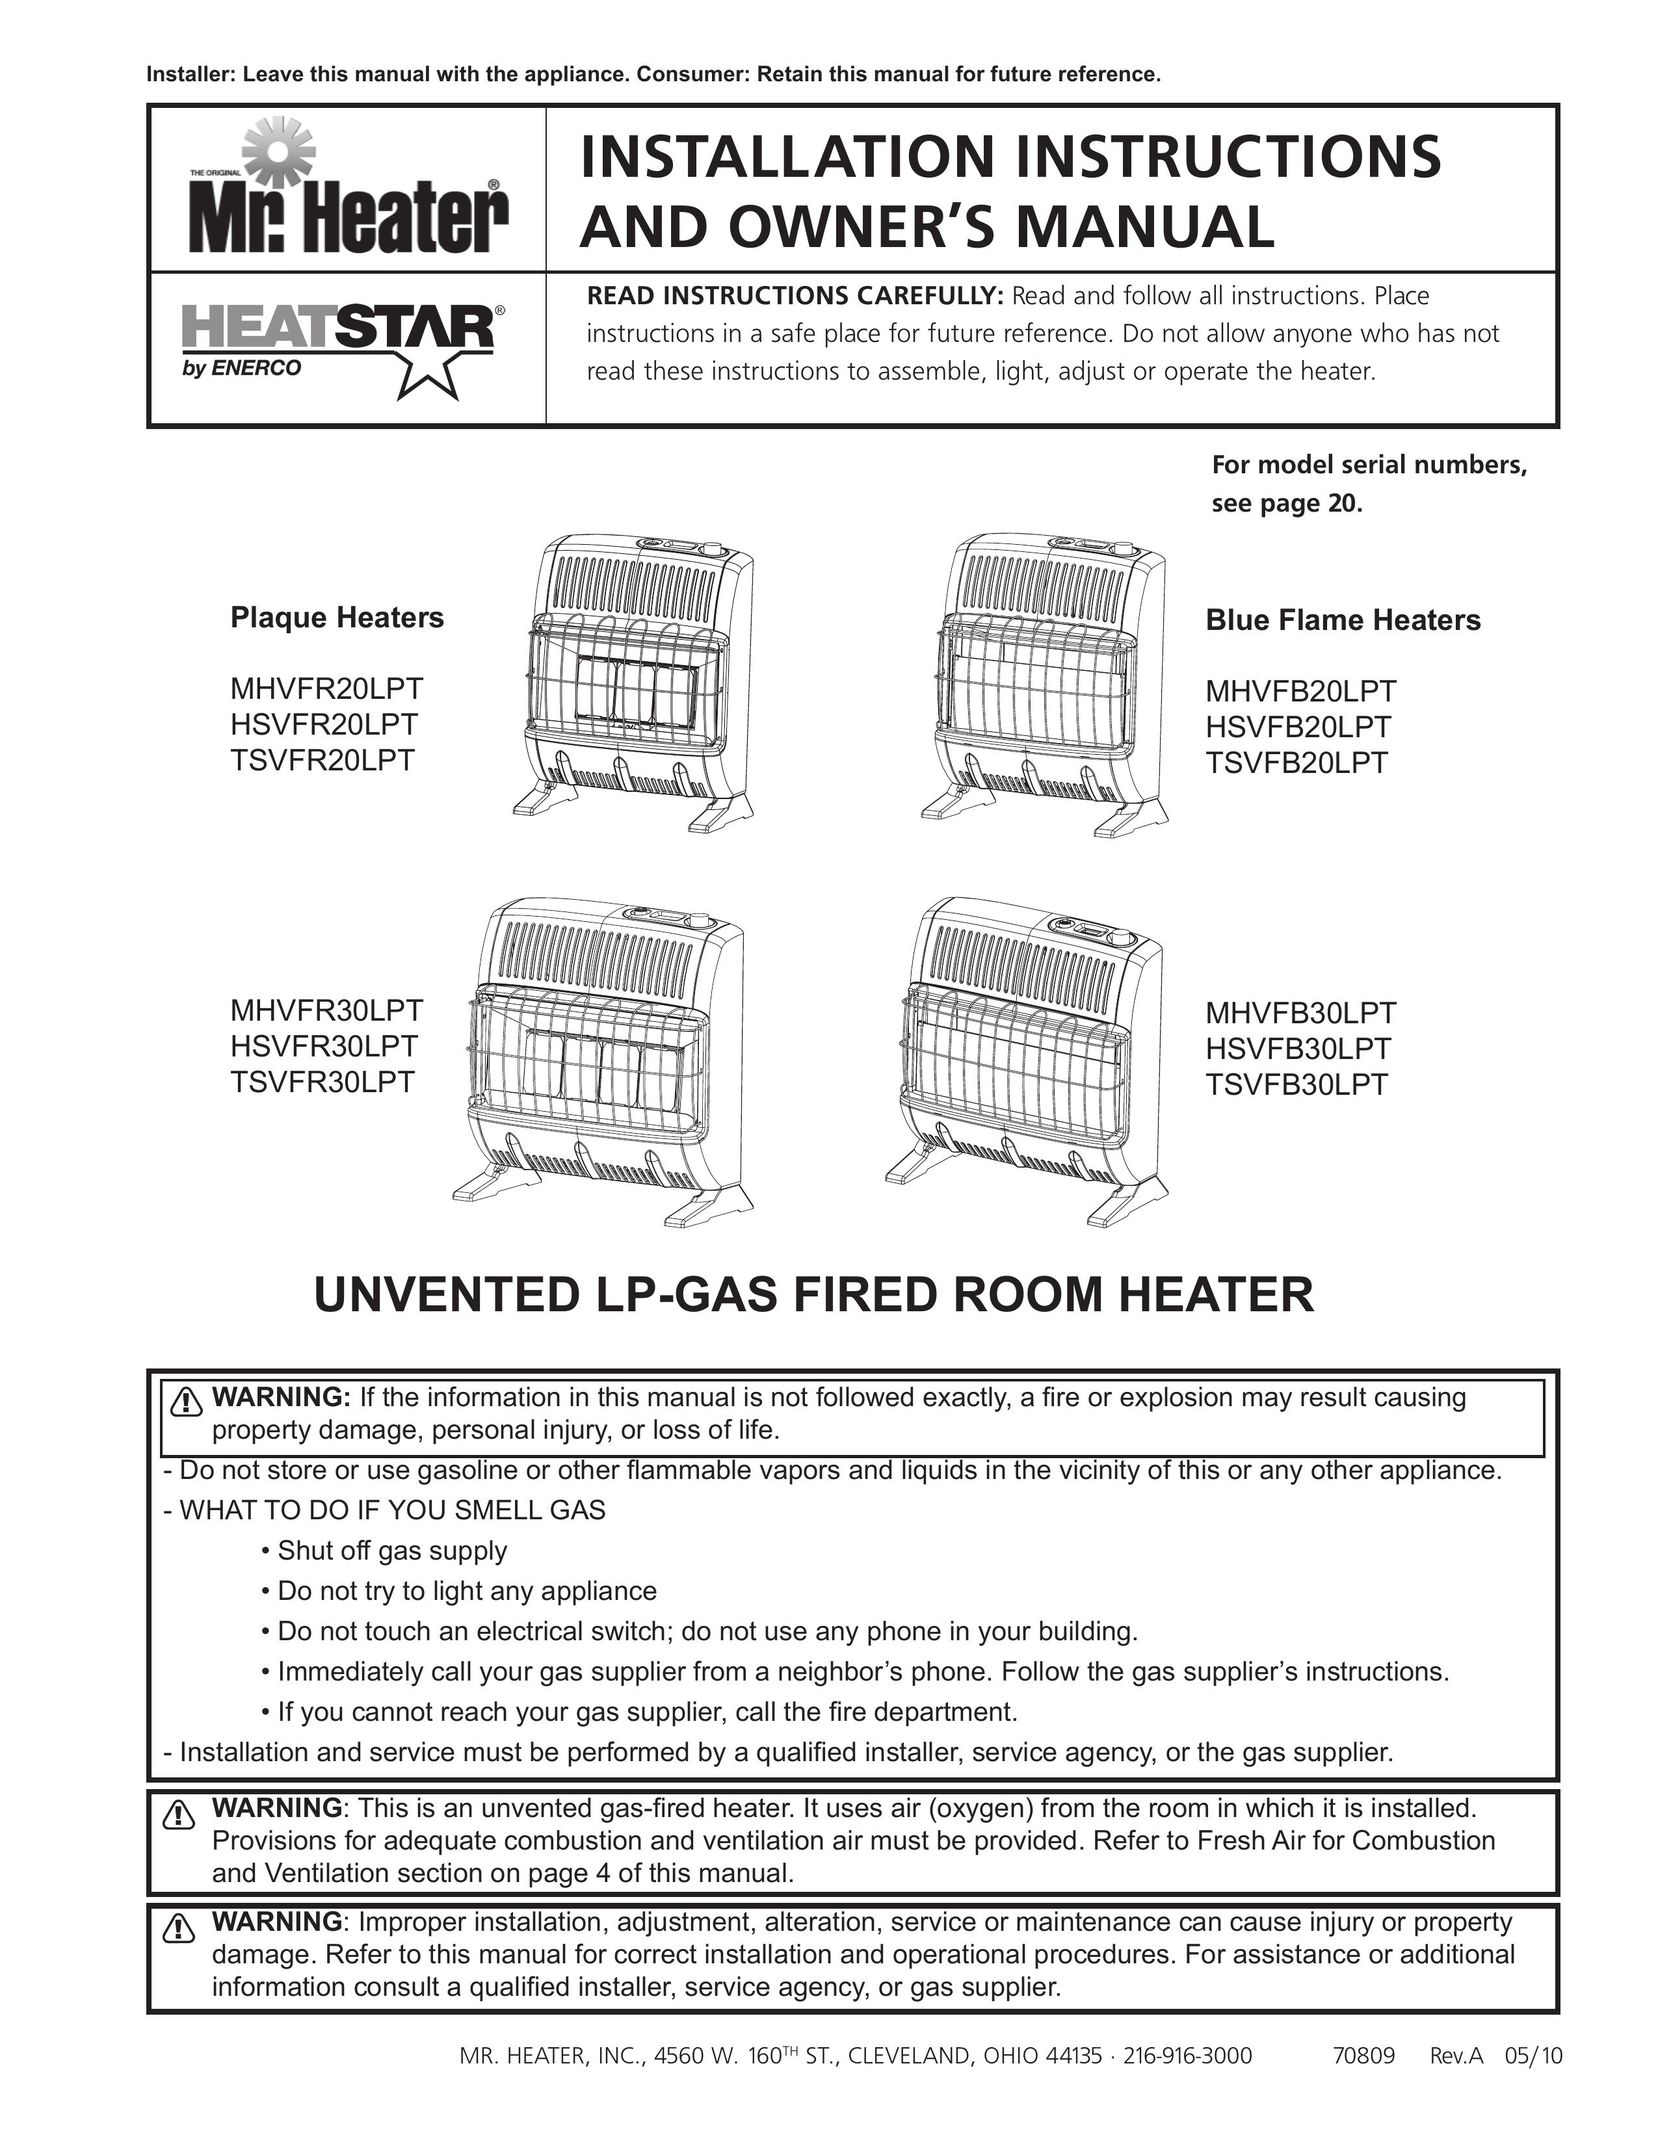 Enerco MHVFR30LPT Gas Heater User Manual